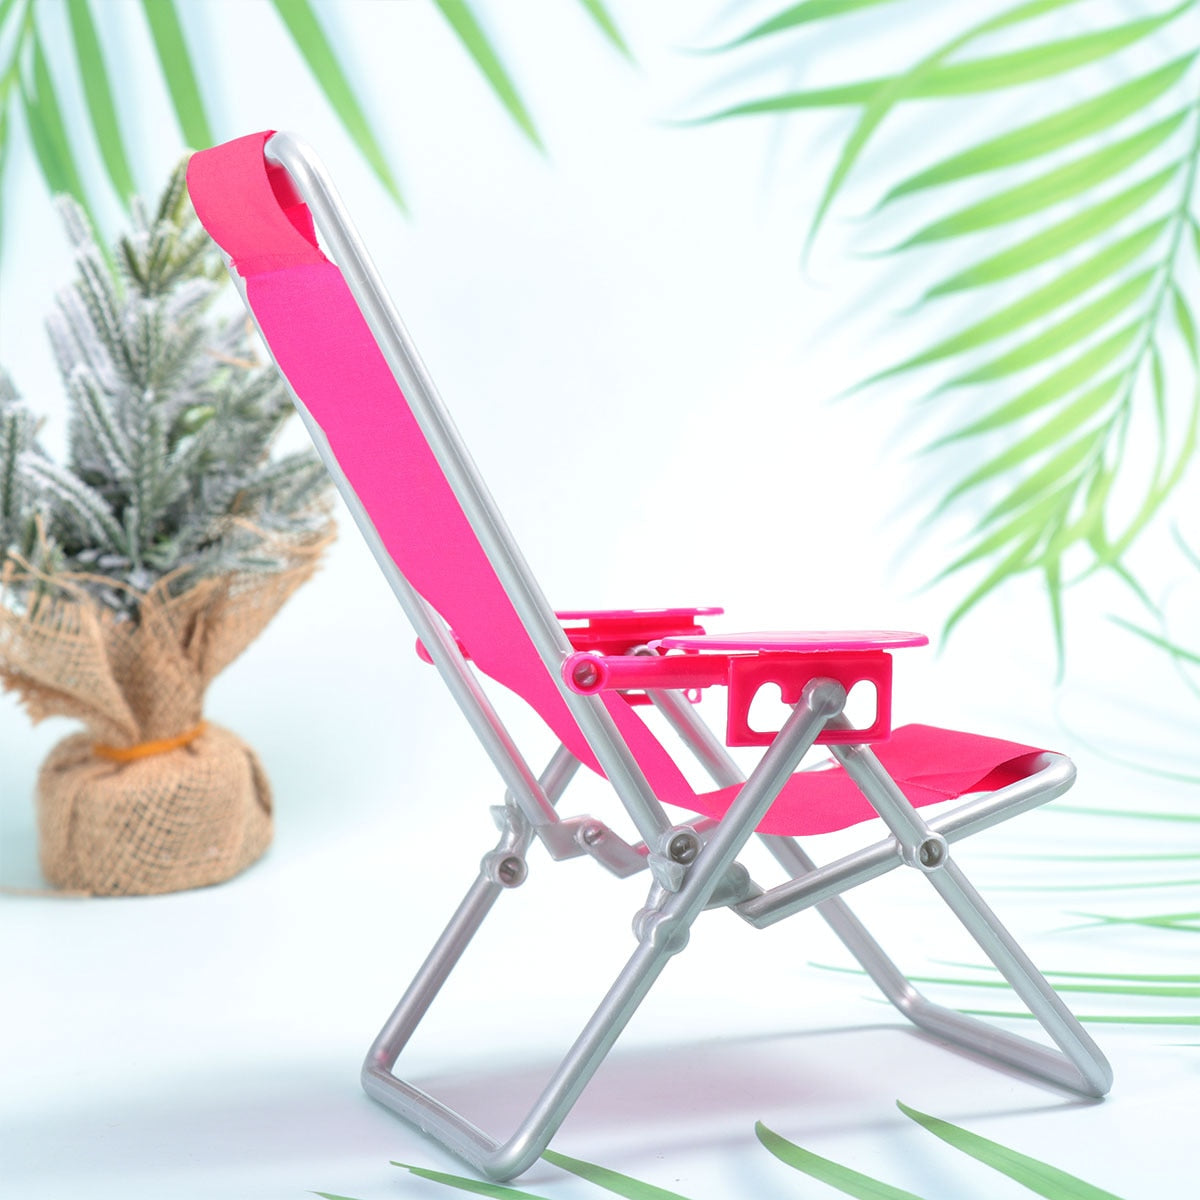 2 Pcs Foldable Lounge Chairs Birthday Present Seaside Folding Beach Lounge Chair